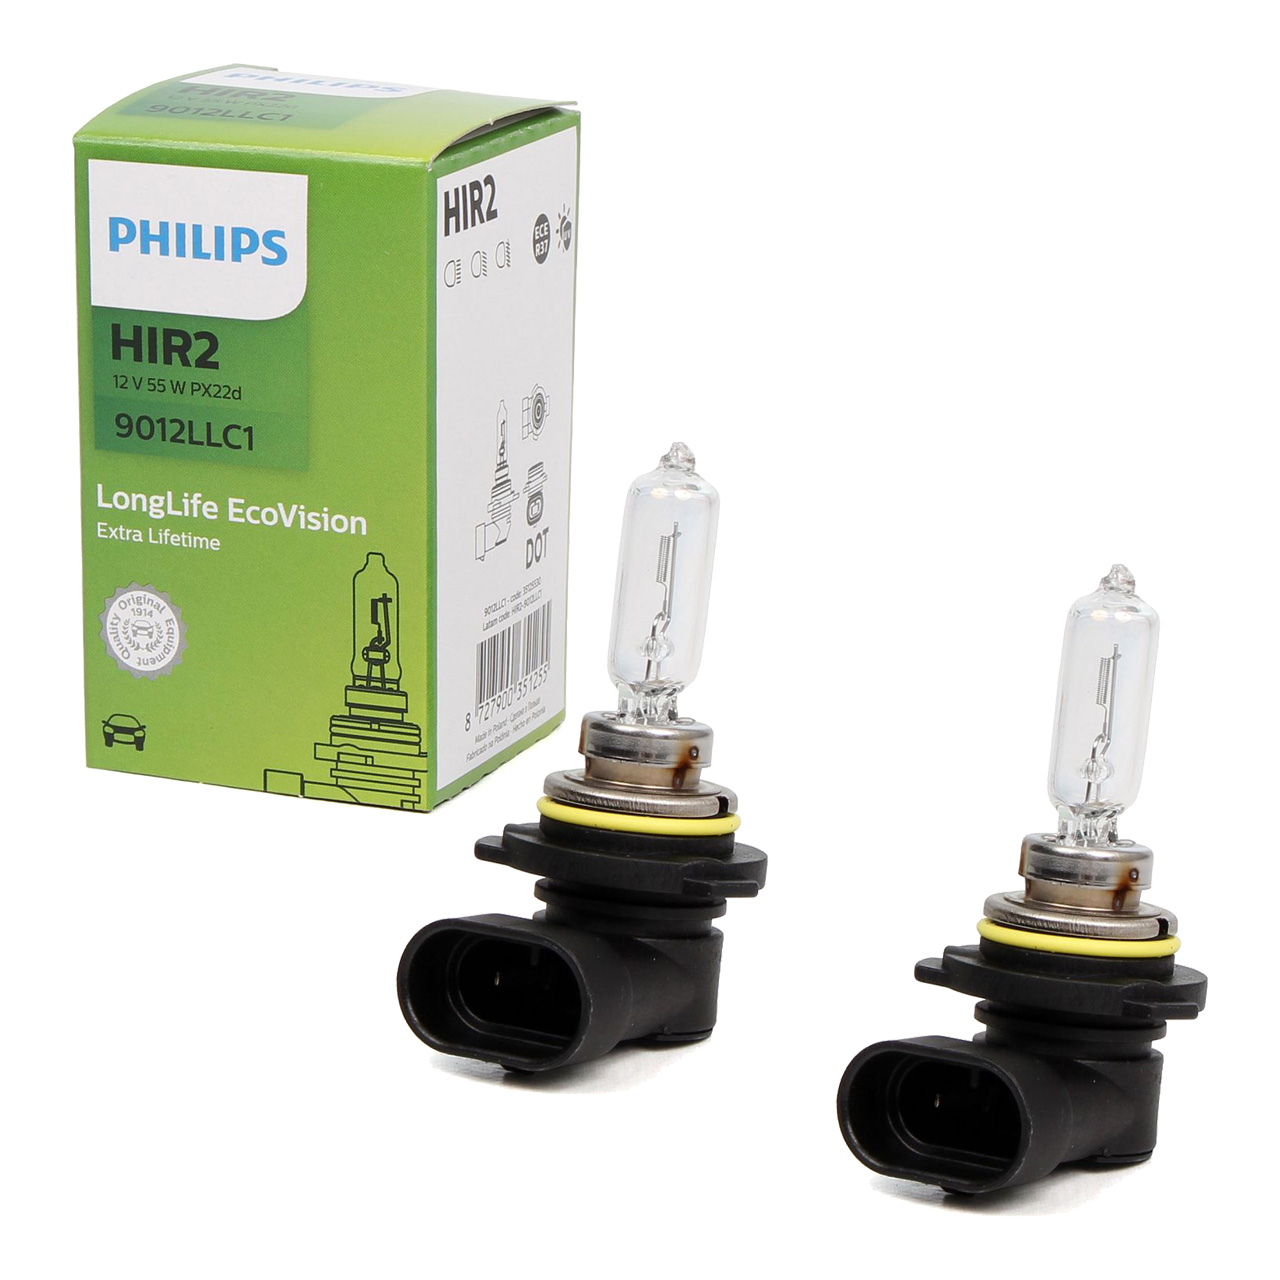 2x PHILIPS 9012LLC1 Halogenlampe Glühlampe LongLife EcoVision HIR2 12V 55W PX22d